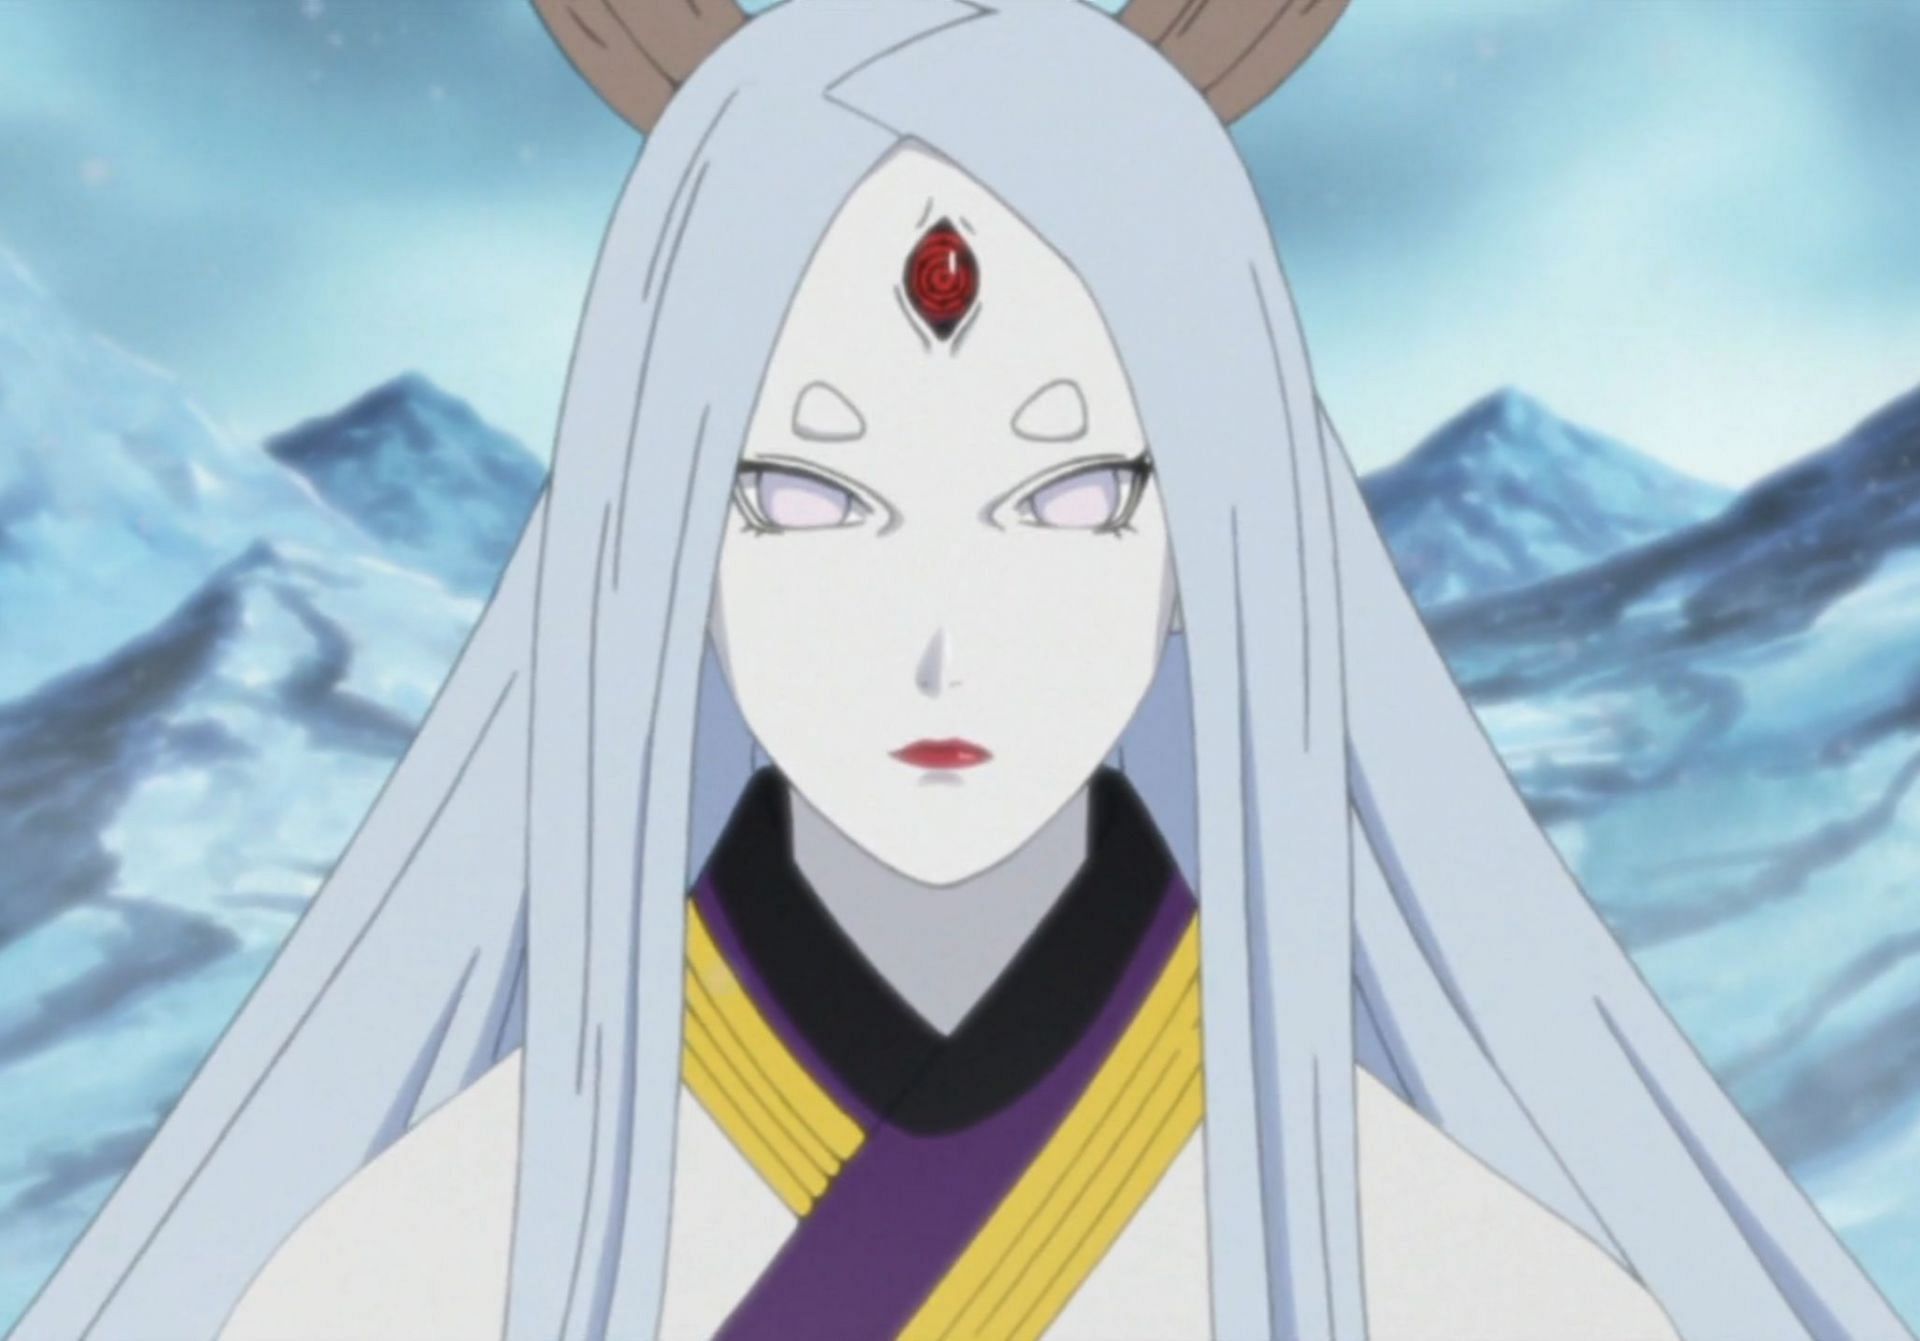 Kaguya Otsutsuki from the Naruto series (Image via Pierrot)